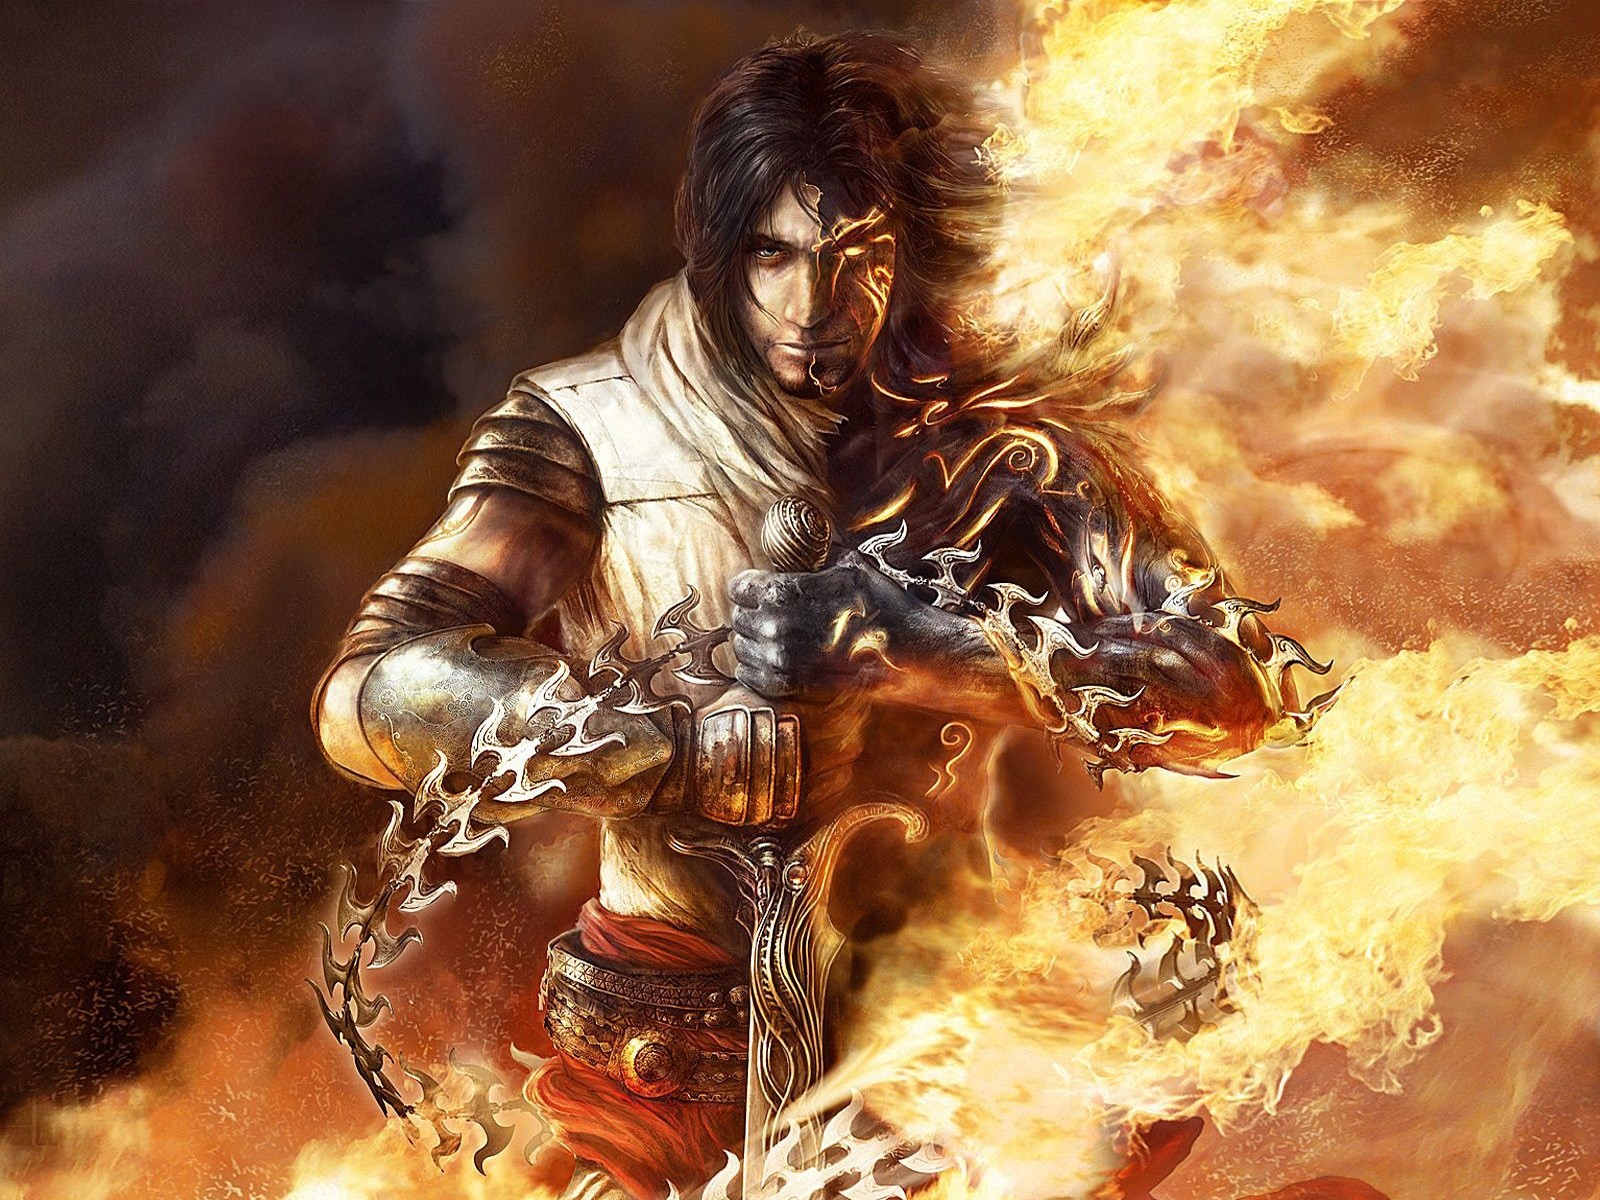 "Prince of Persia: The Two Thrones (Video Game)" desktop wallpaper (1600 x 1200 pixels)